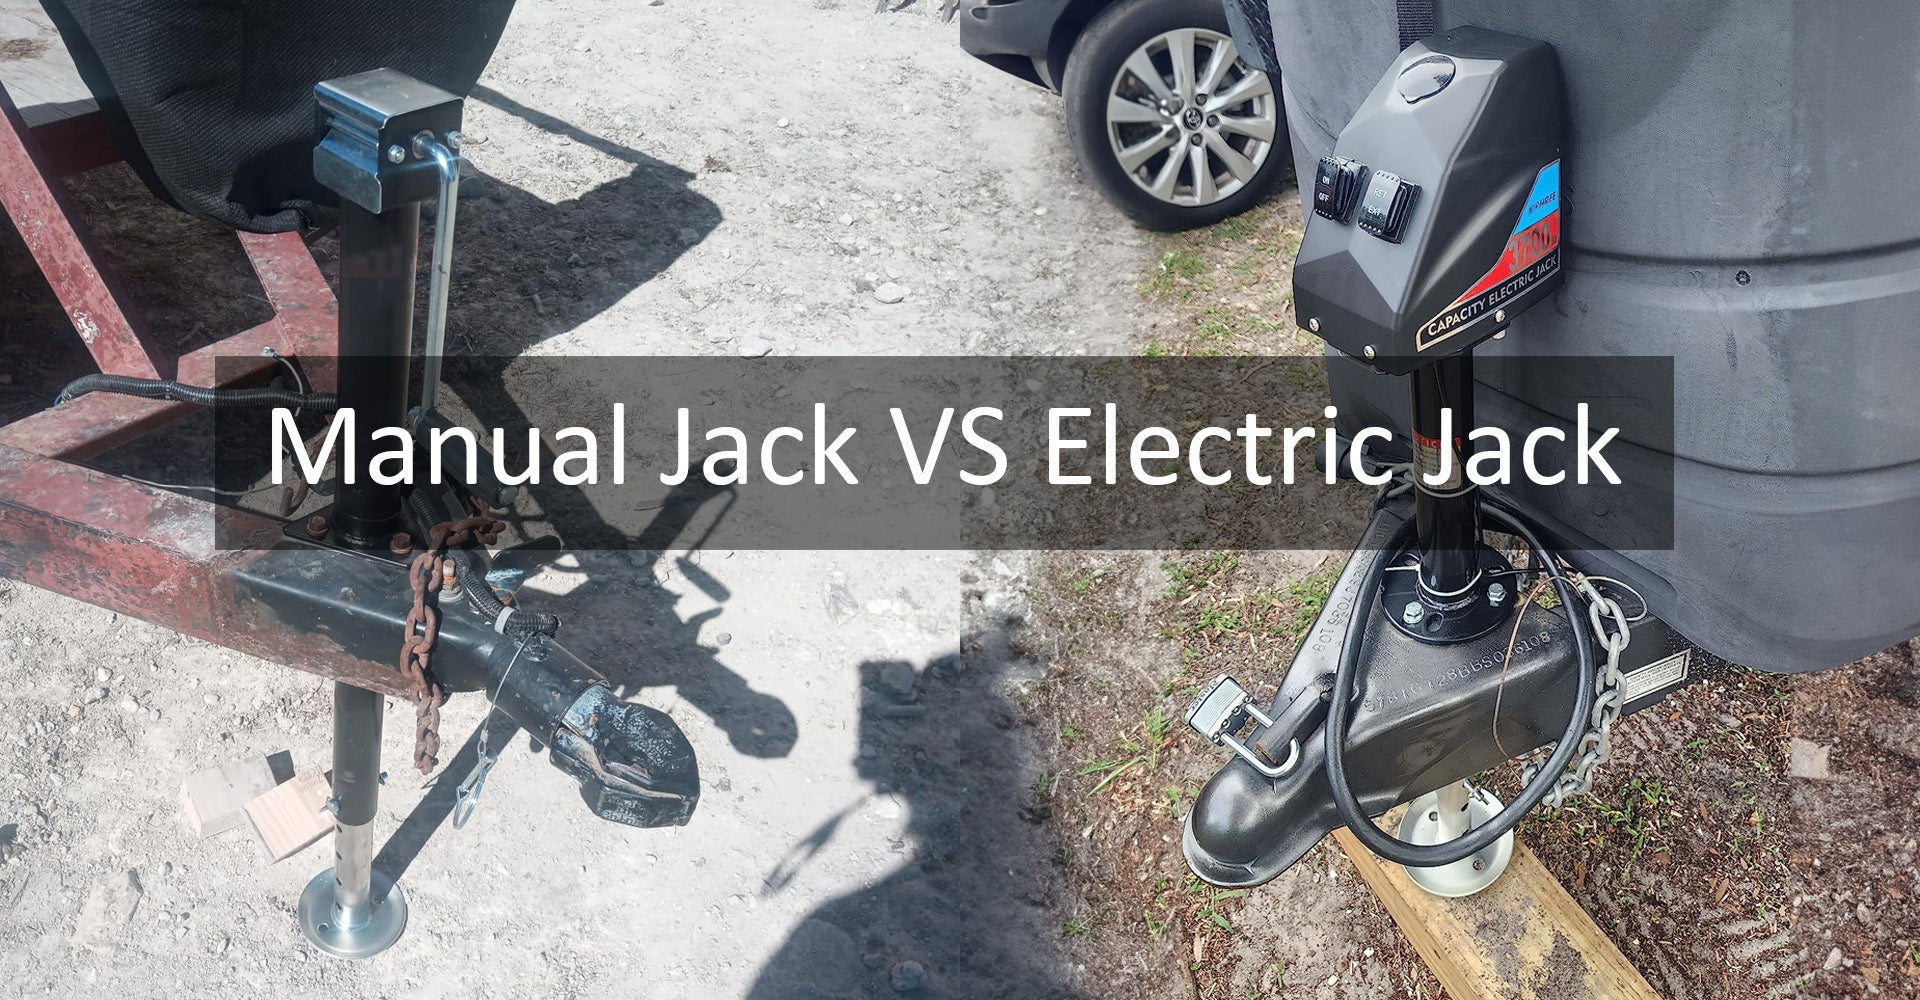 Manual Jacks VS Electric Jacks